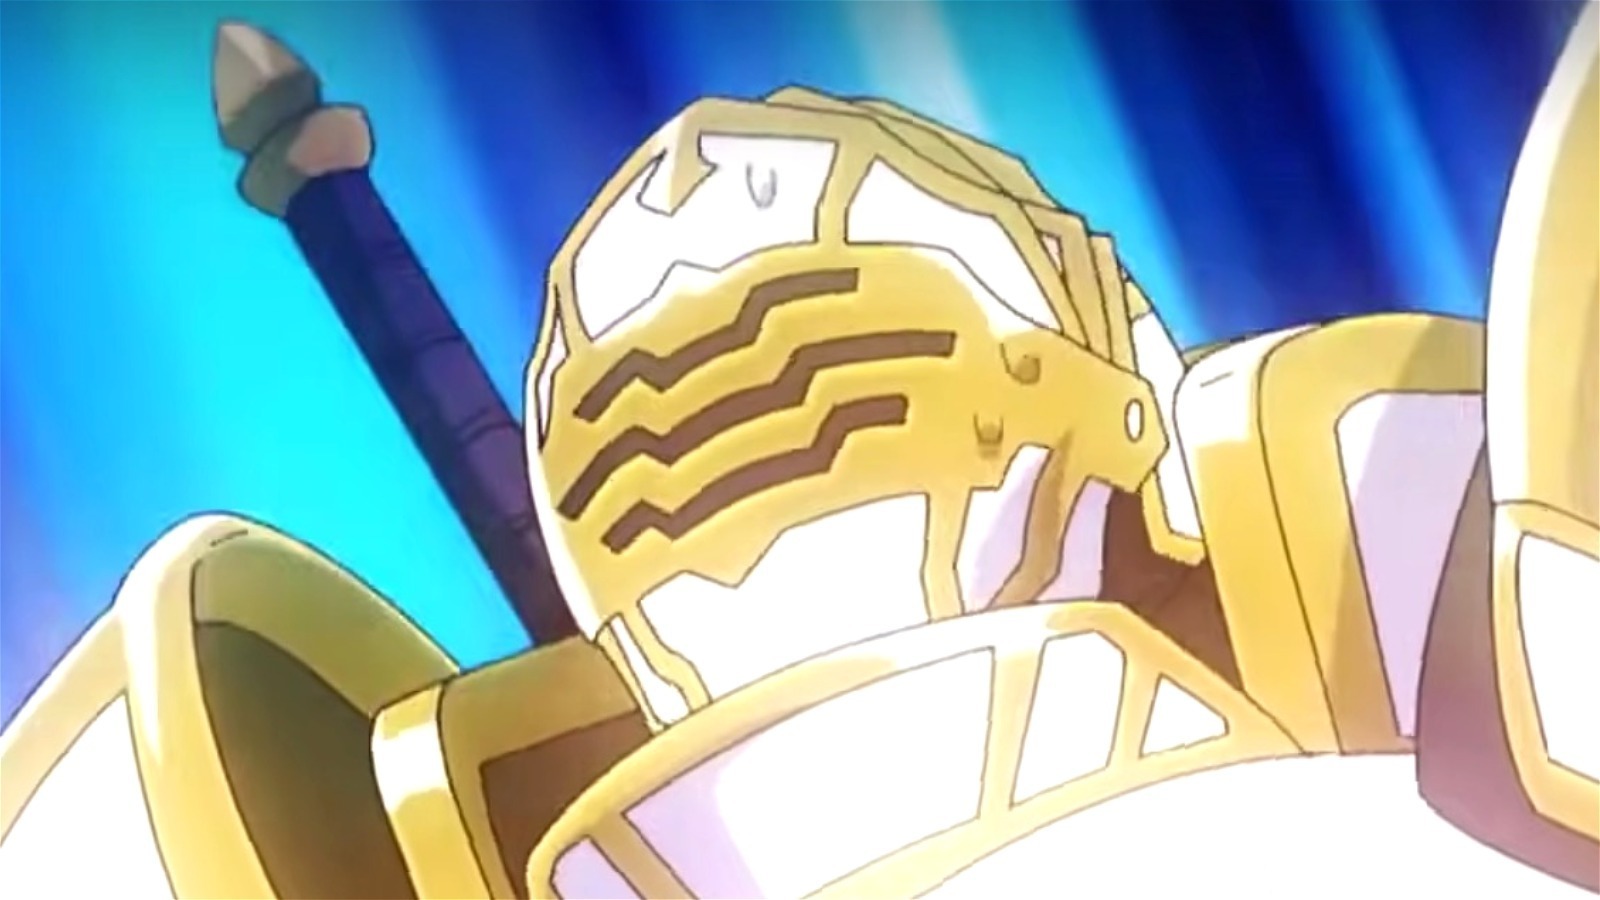 Skeleton Knight in Another world#anime @V8_Marius | TikTok